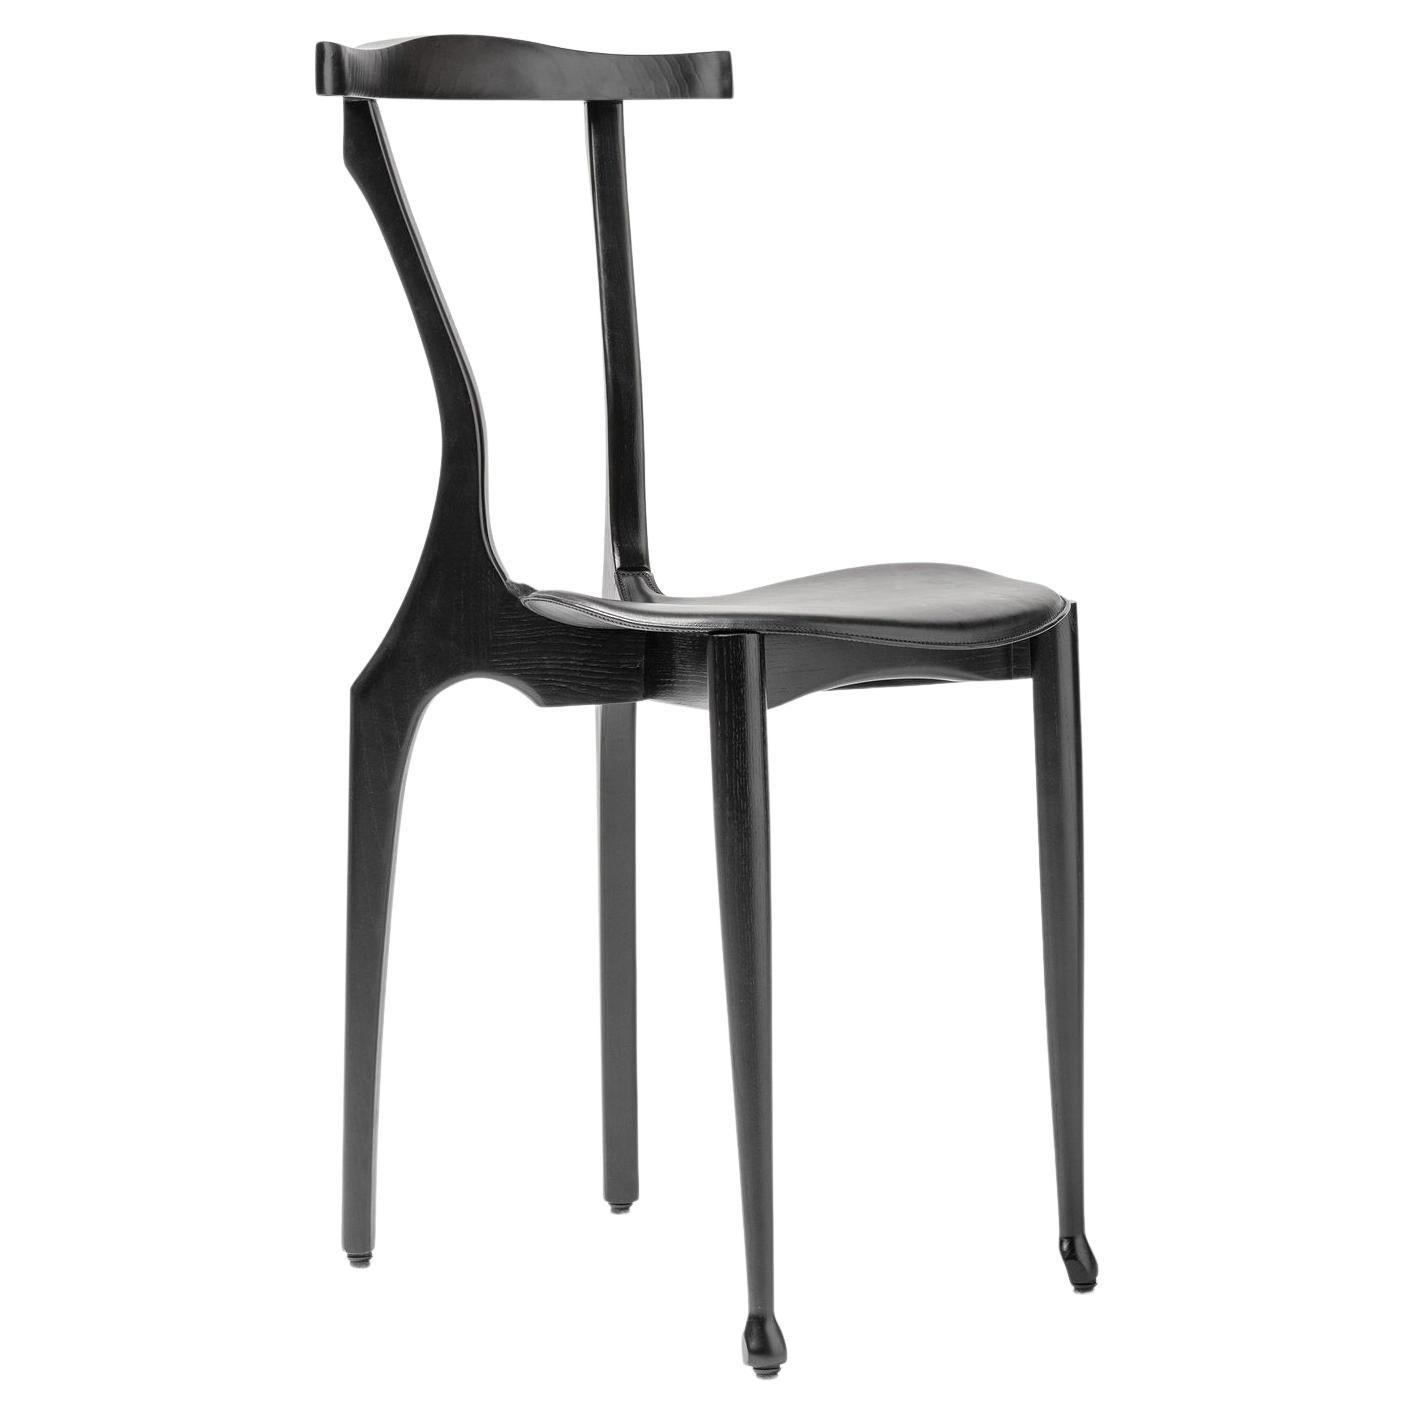 Gaulinetta Black Chair by Oscar Tusquets For Sale